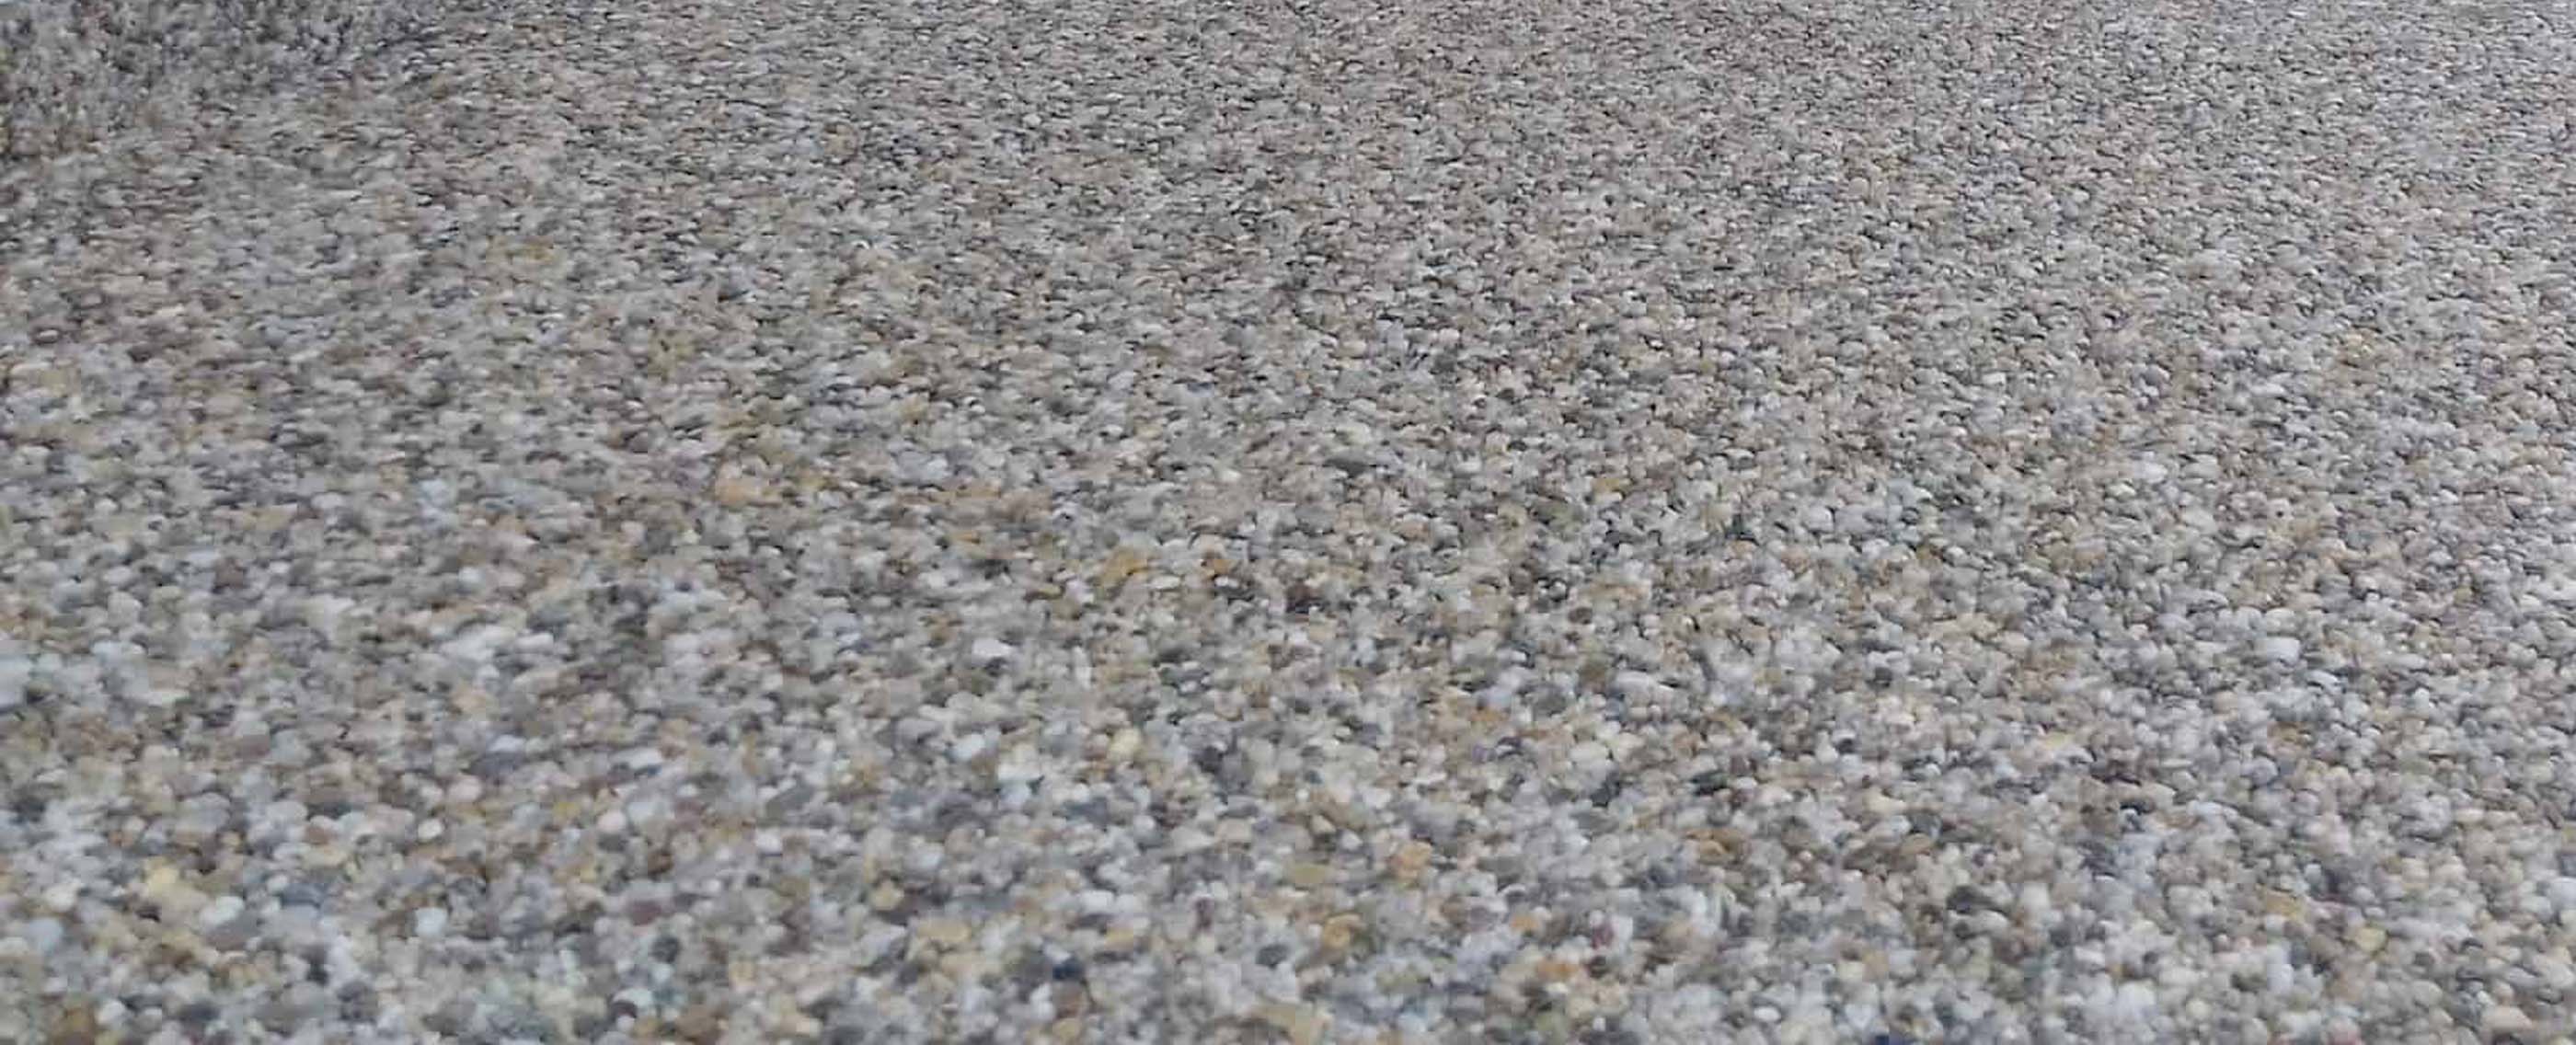 Sample of a stone carpet concrete coating